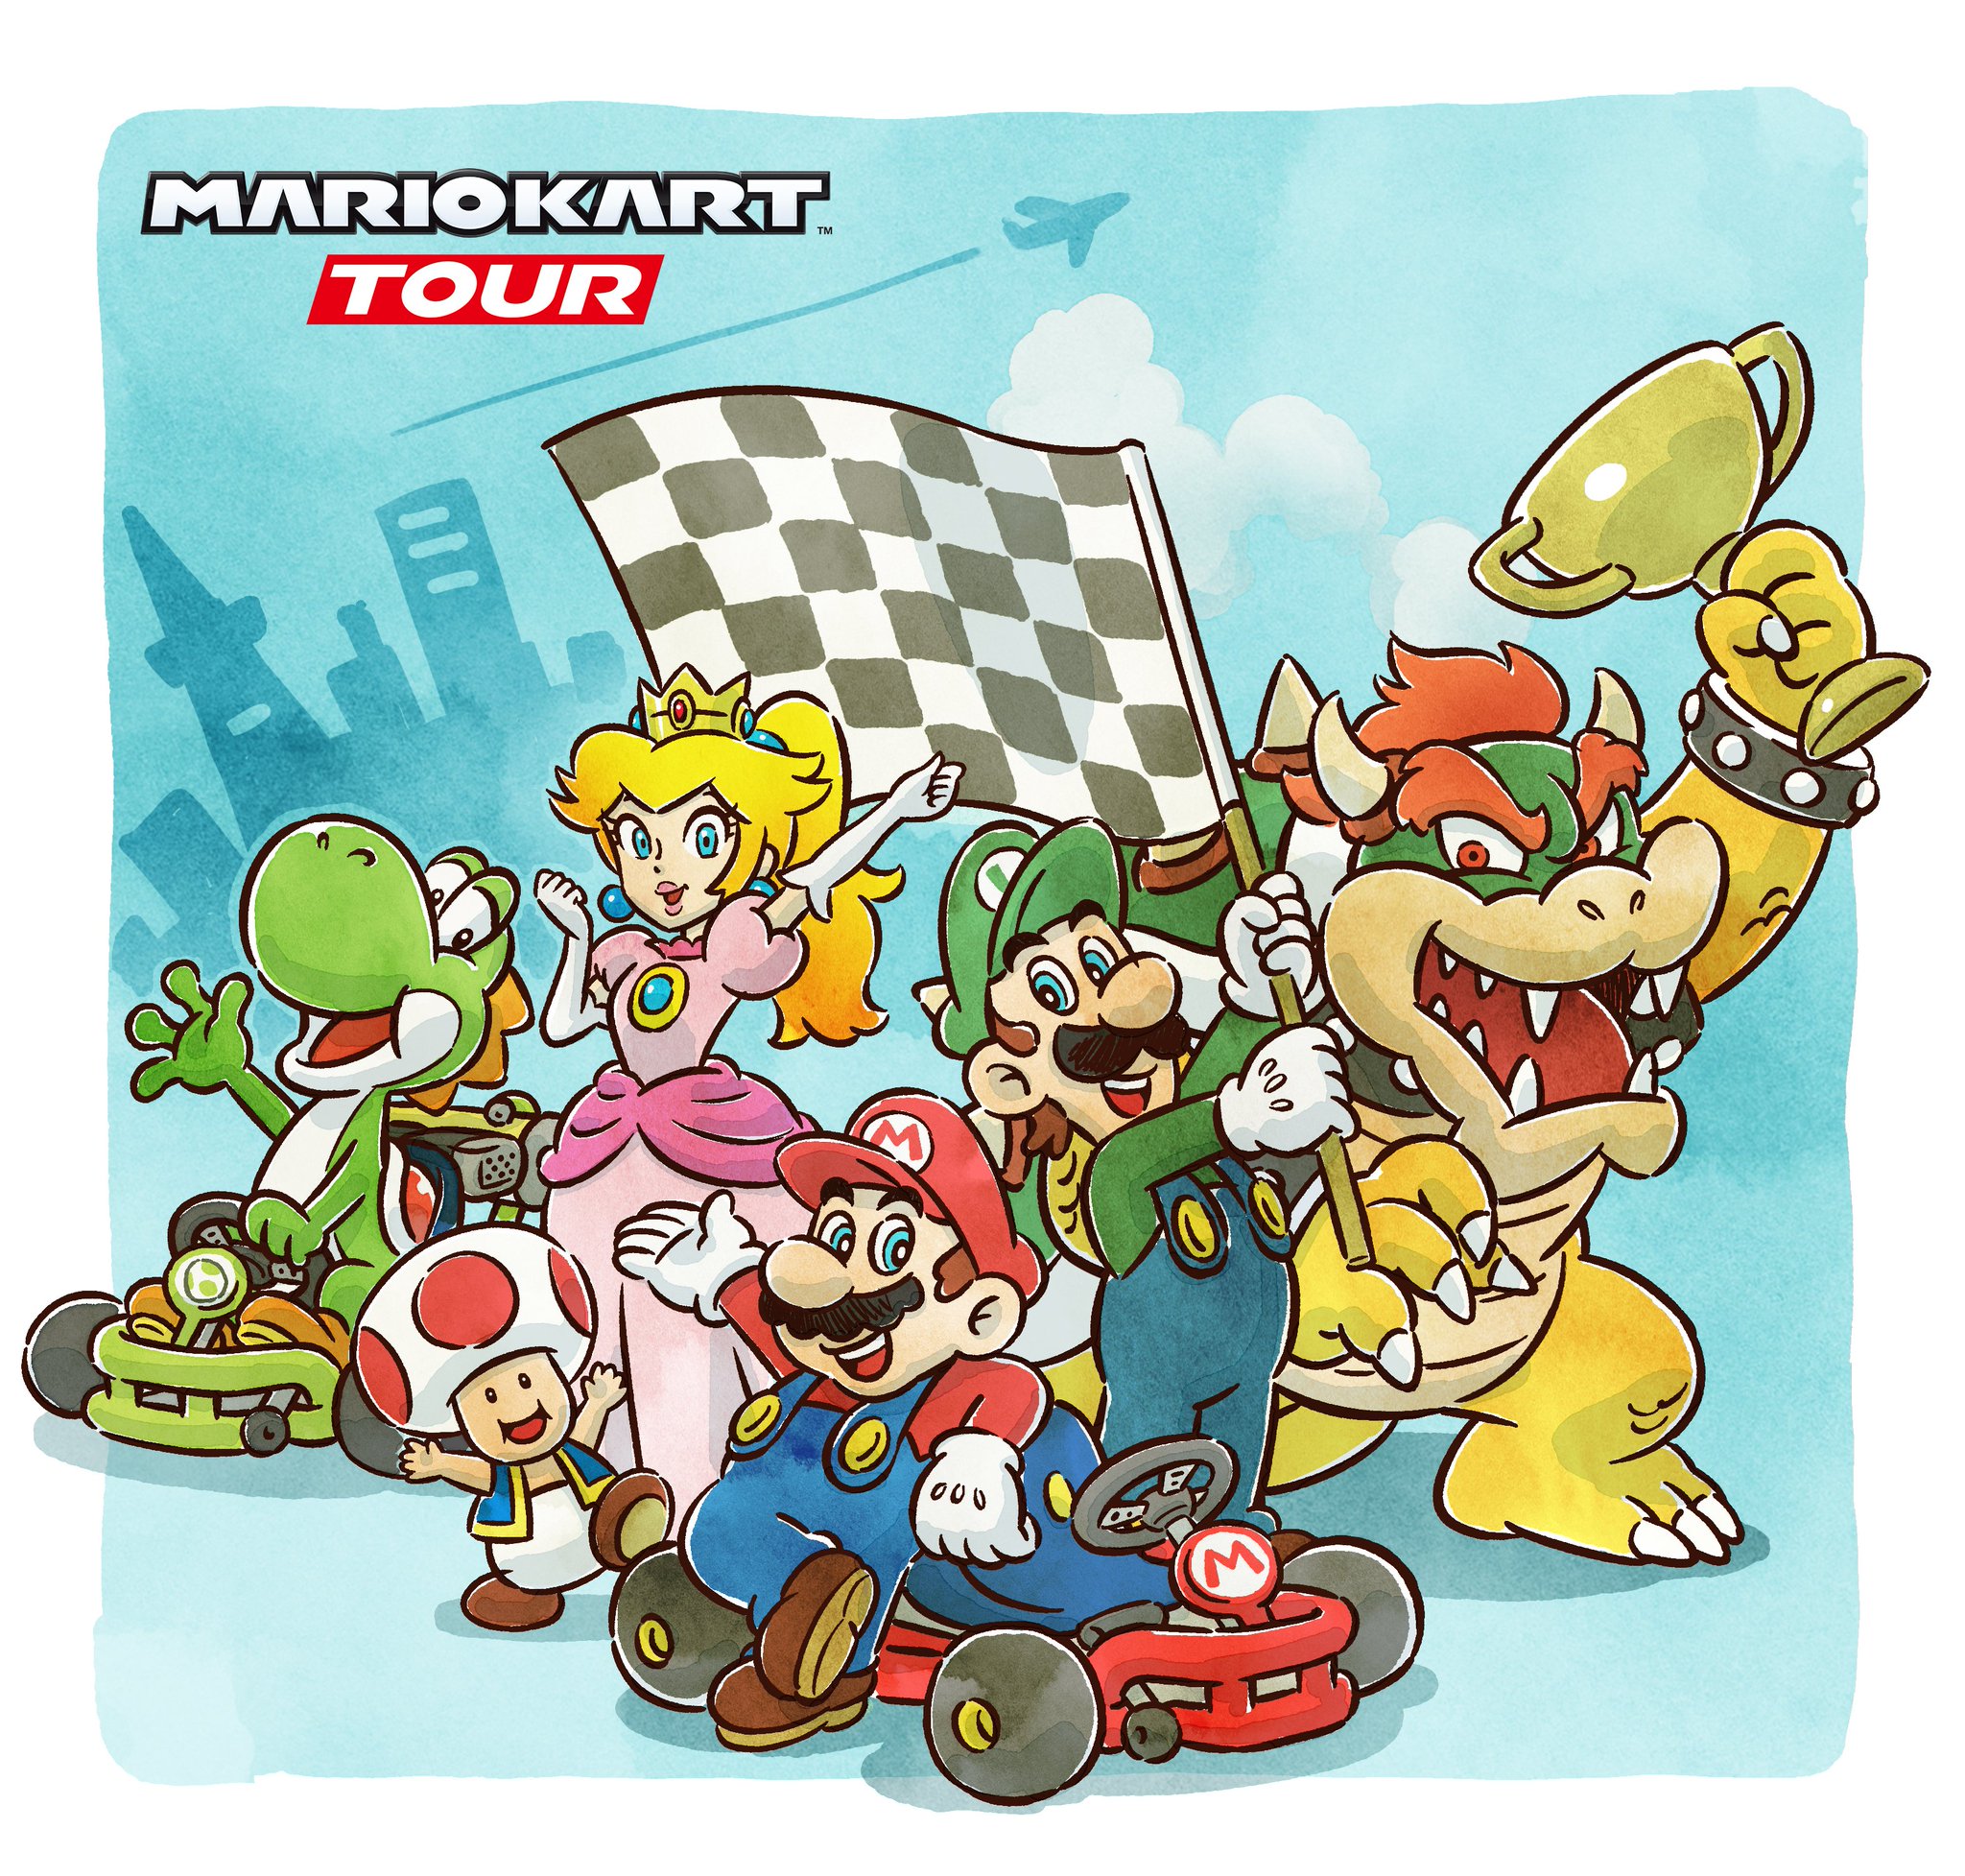 Mario Kart Tour on X: The Metropolitan Tour is almost over. Thanks for  racing! Next up in #MarioKartTour is the Bangkok Tour!   / X